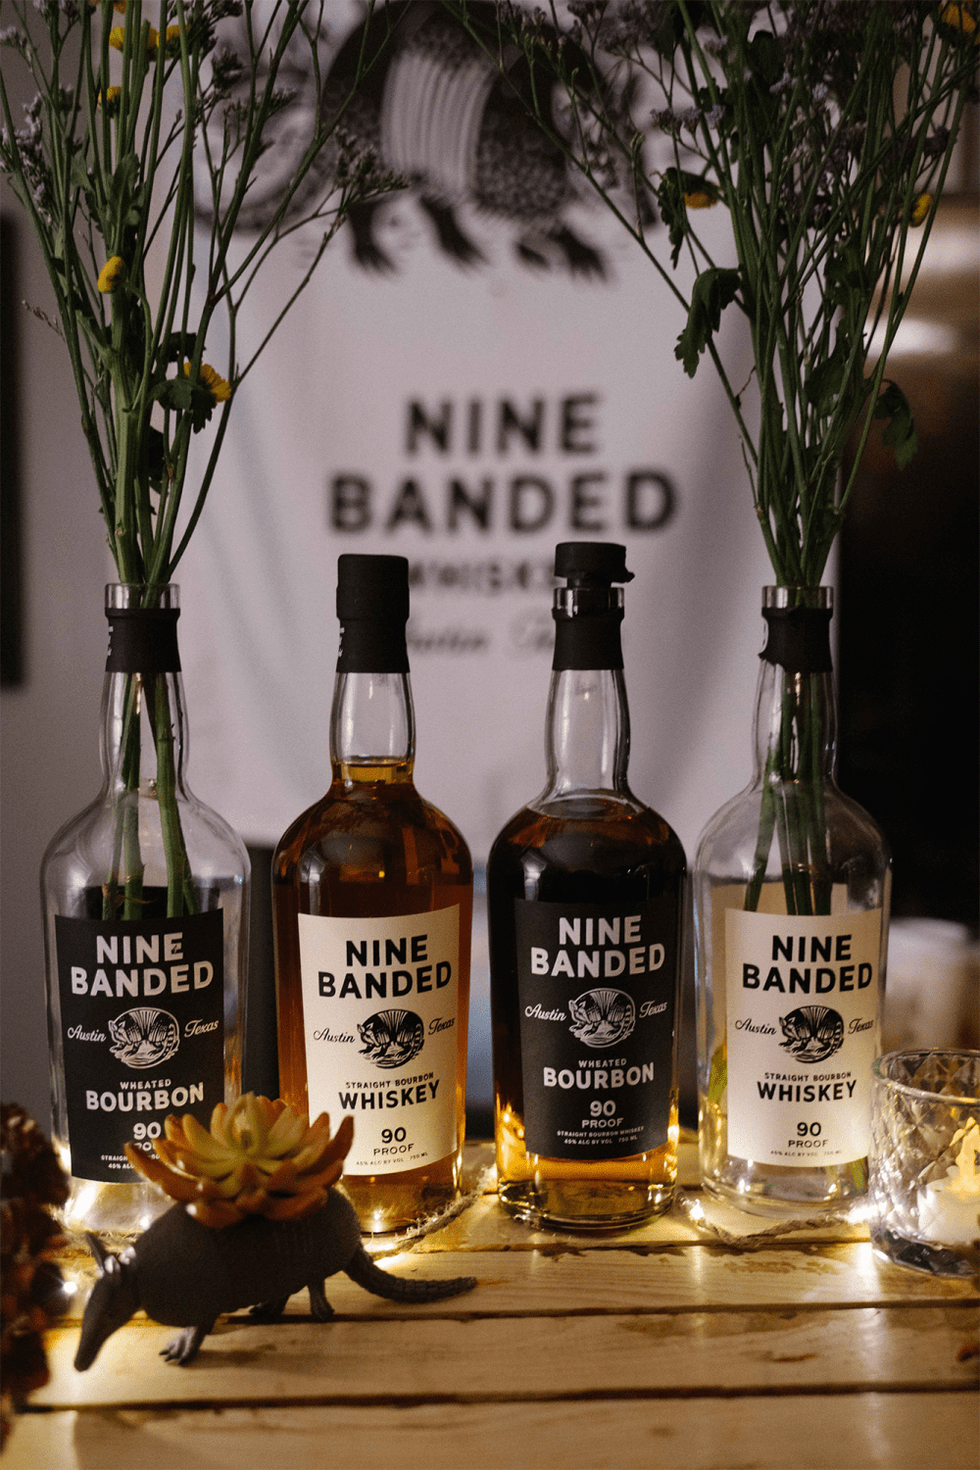 Nine Banded Whiskey and bourbon bottles